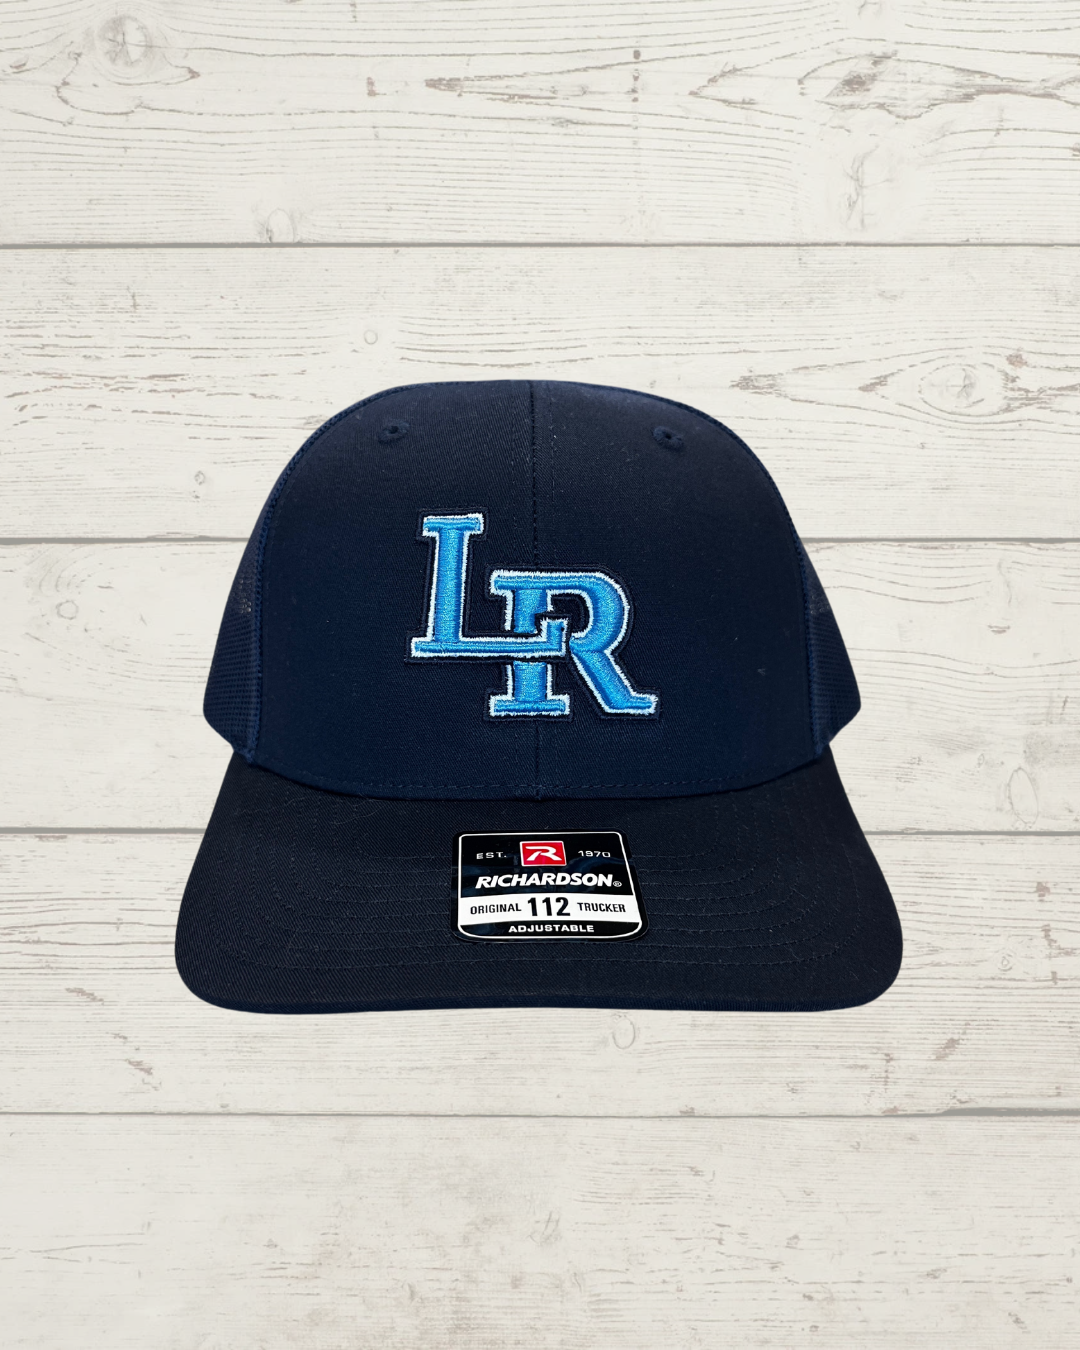 Richardson 3D LR Snapback Hat